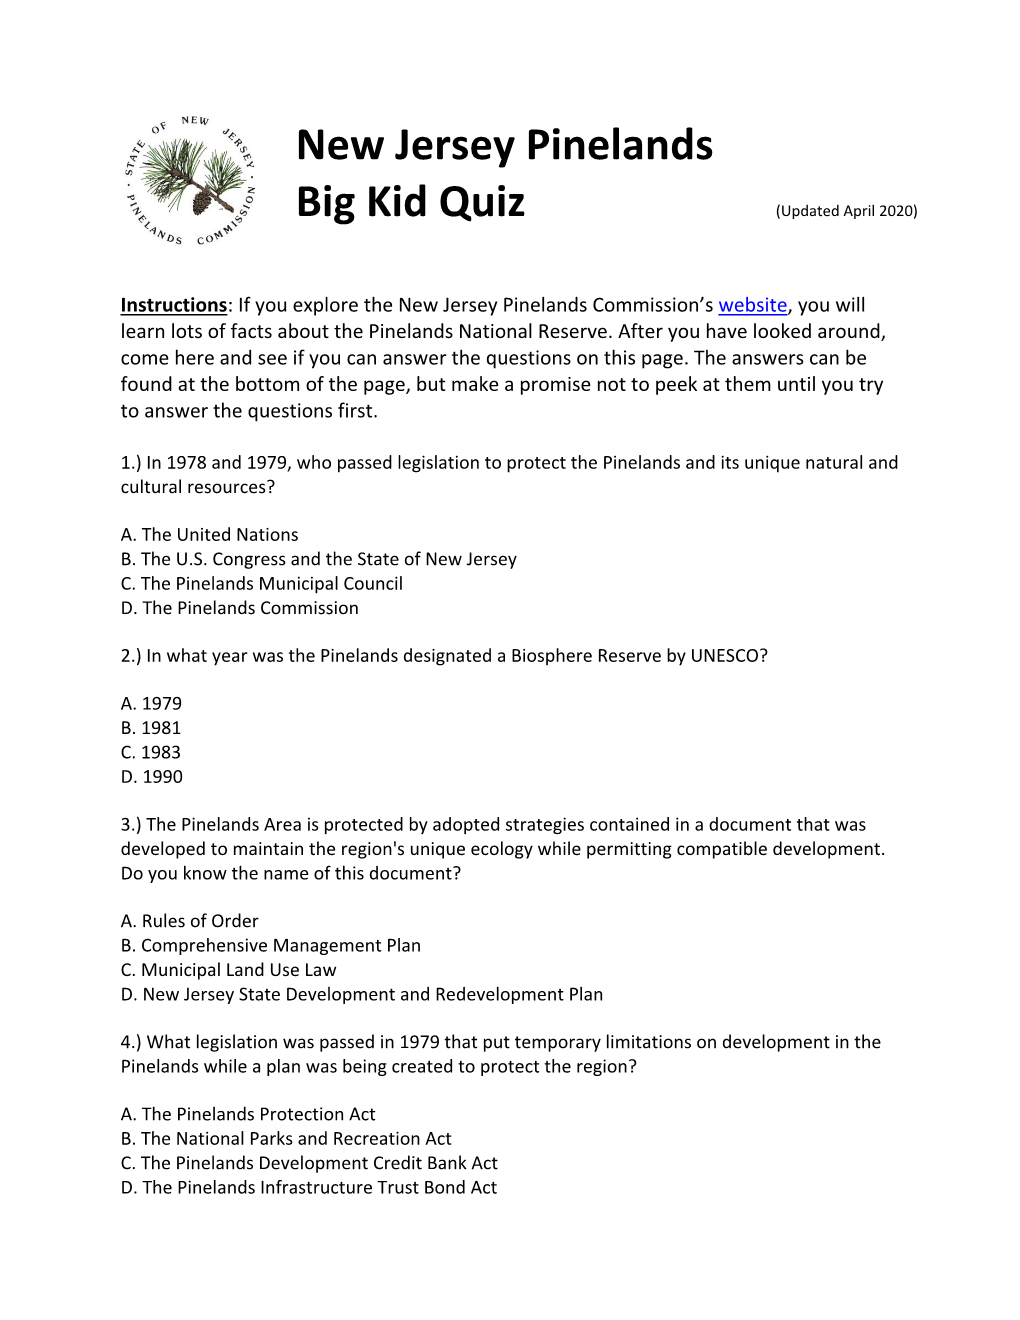 New Jersey Pinelands Big Kid Quiz